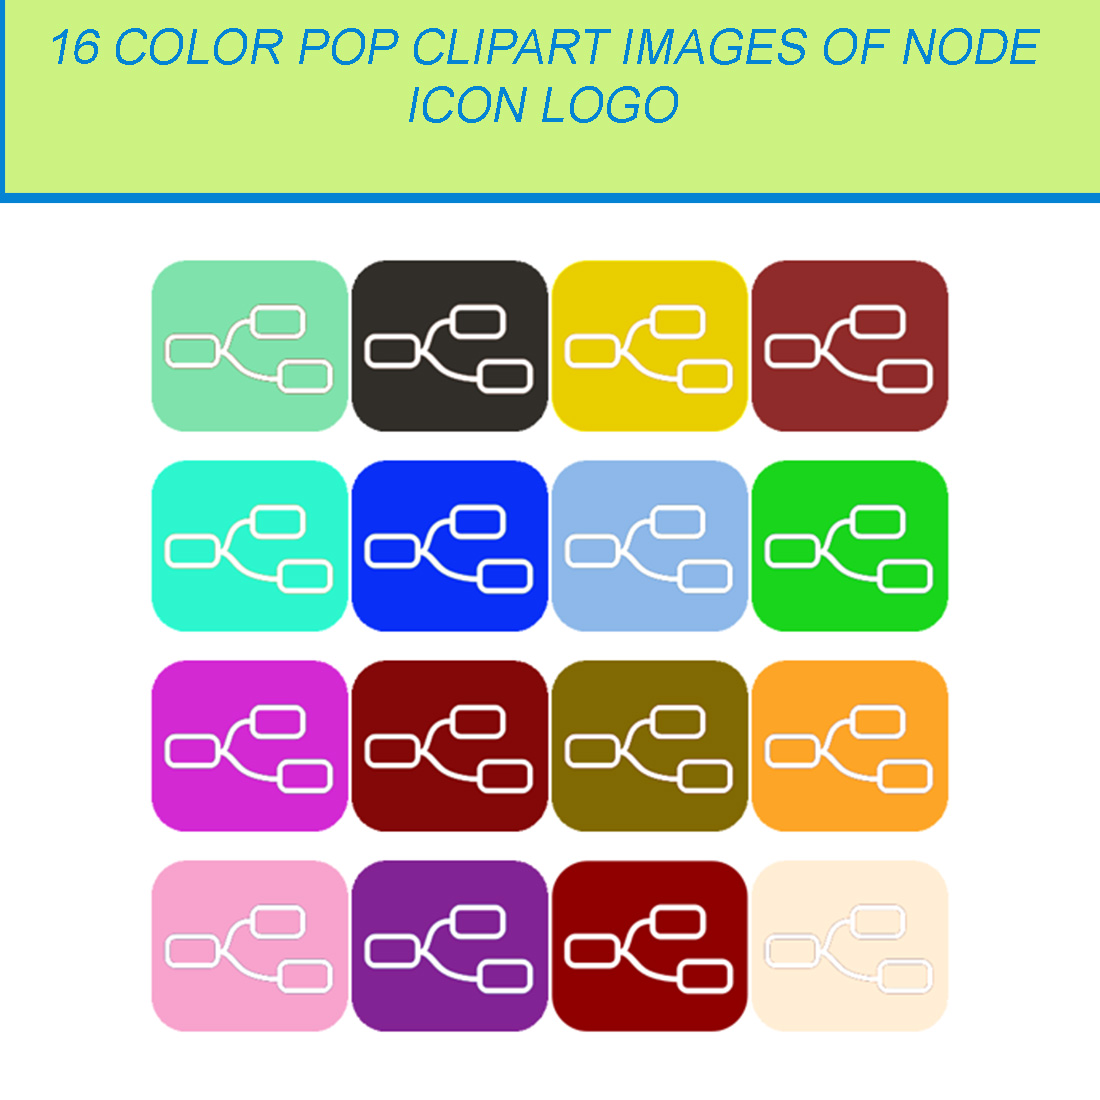 16 COLOR POP CLIPART IMAGES OF NODEICONLOGO cover image.